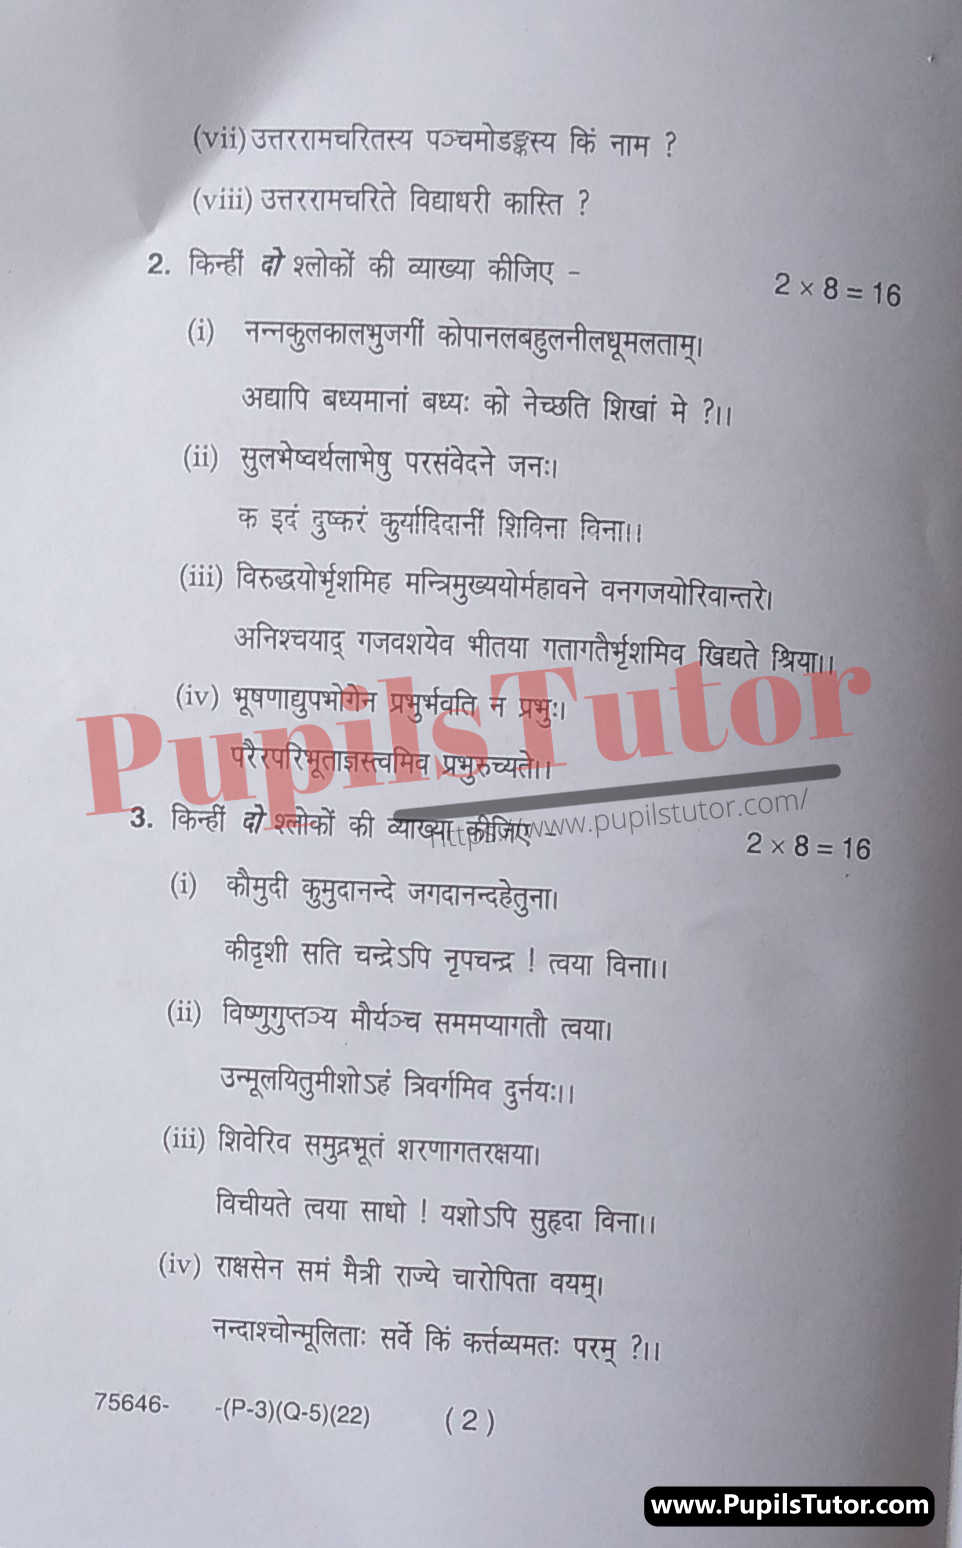 M.D. University M.A. [Sanskrit] Natak Third Semester Important Question Answer And Solution - www.pupilstutor.com (Paper Page Number 2)